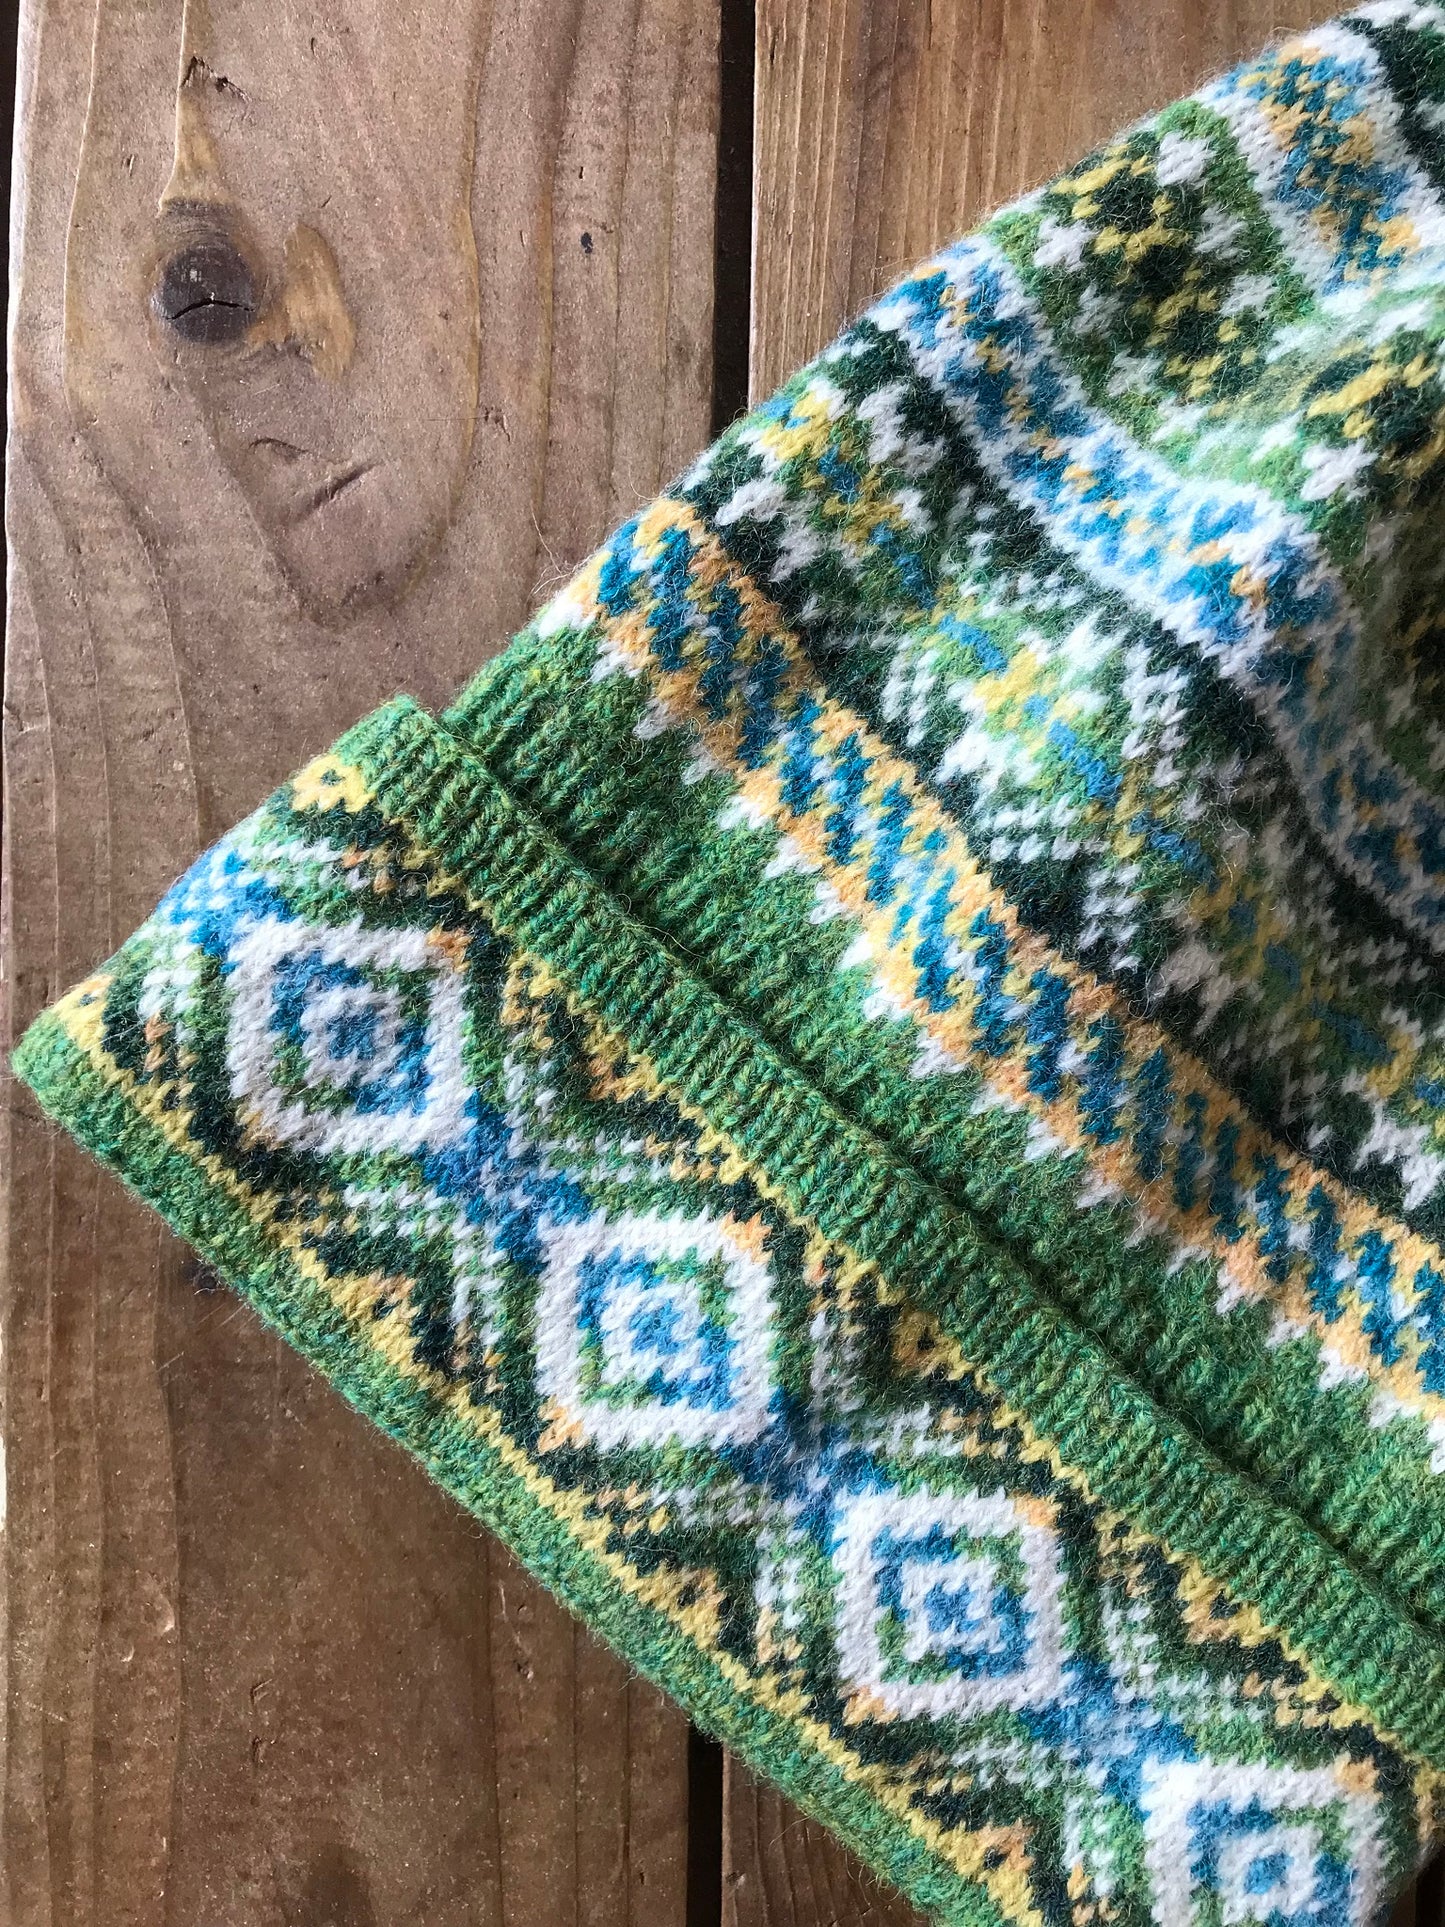 Knitting Jenny Pattern 23: Fair Isle Inspired Fisherman’s Kep and Design Workbook